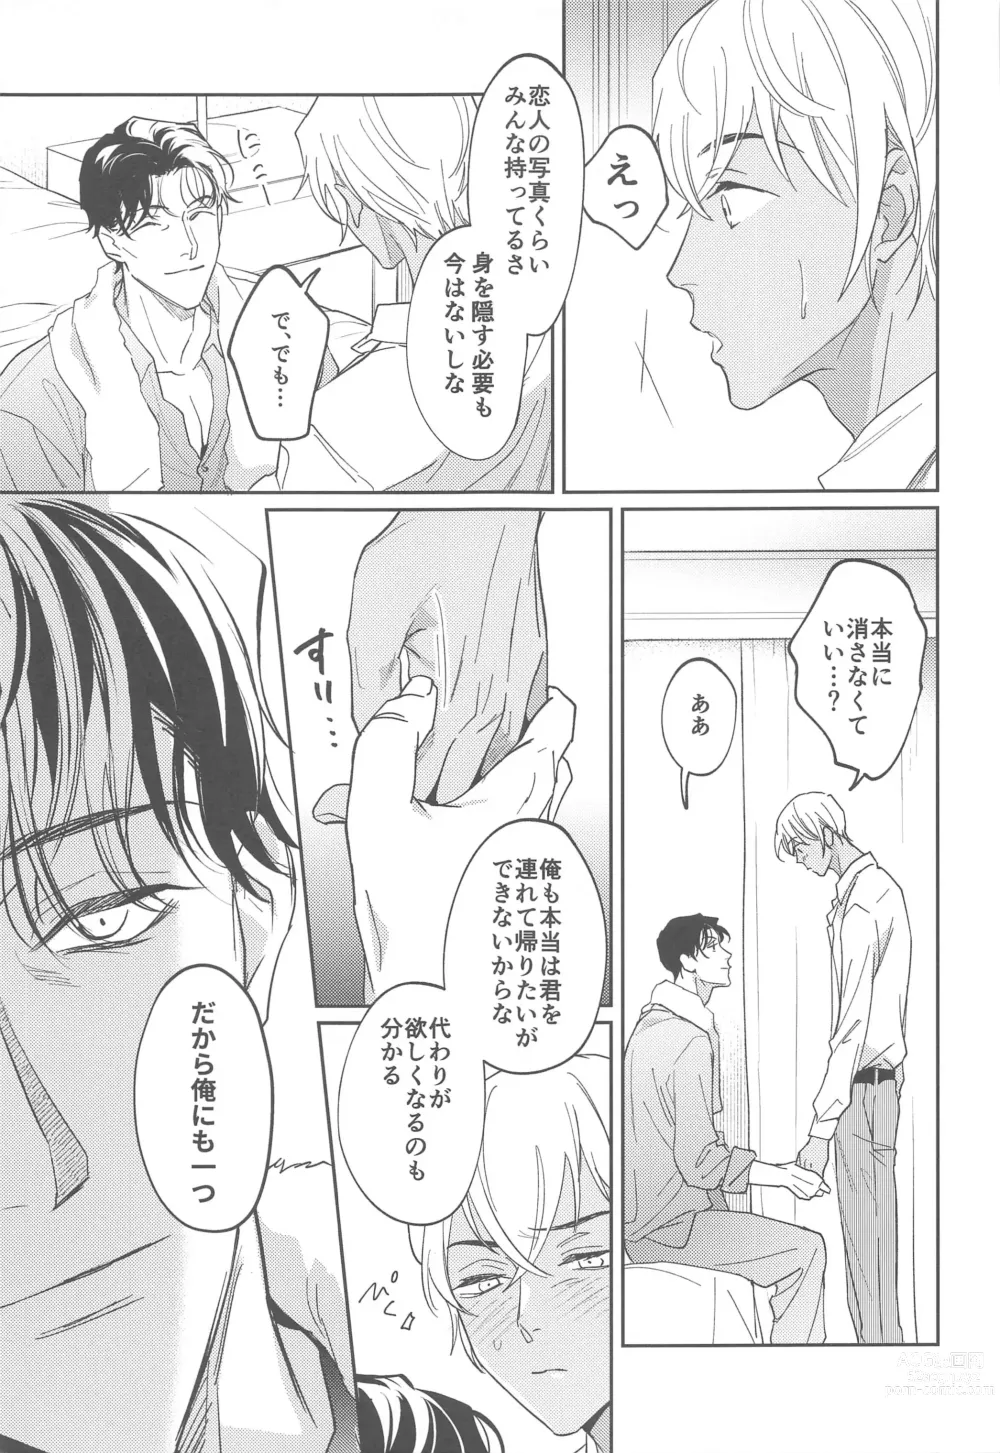 Page 12 of doujinshi REC